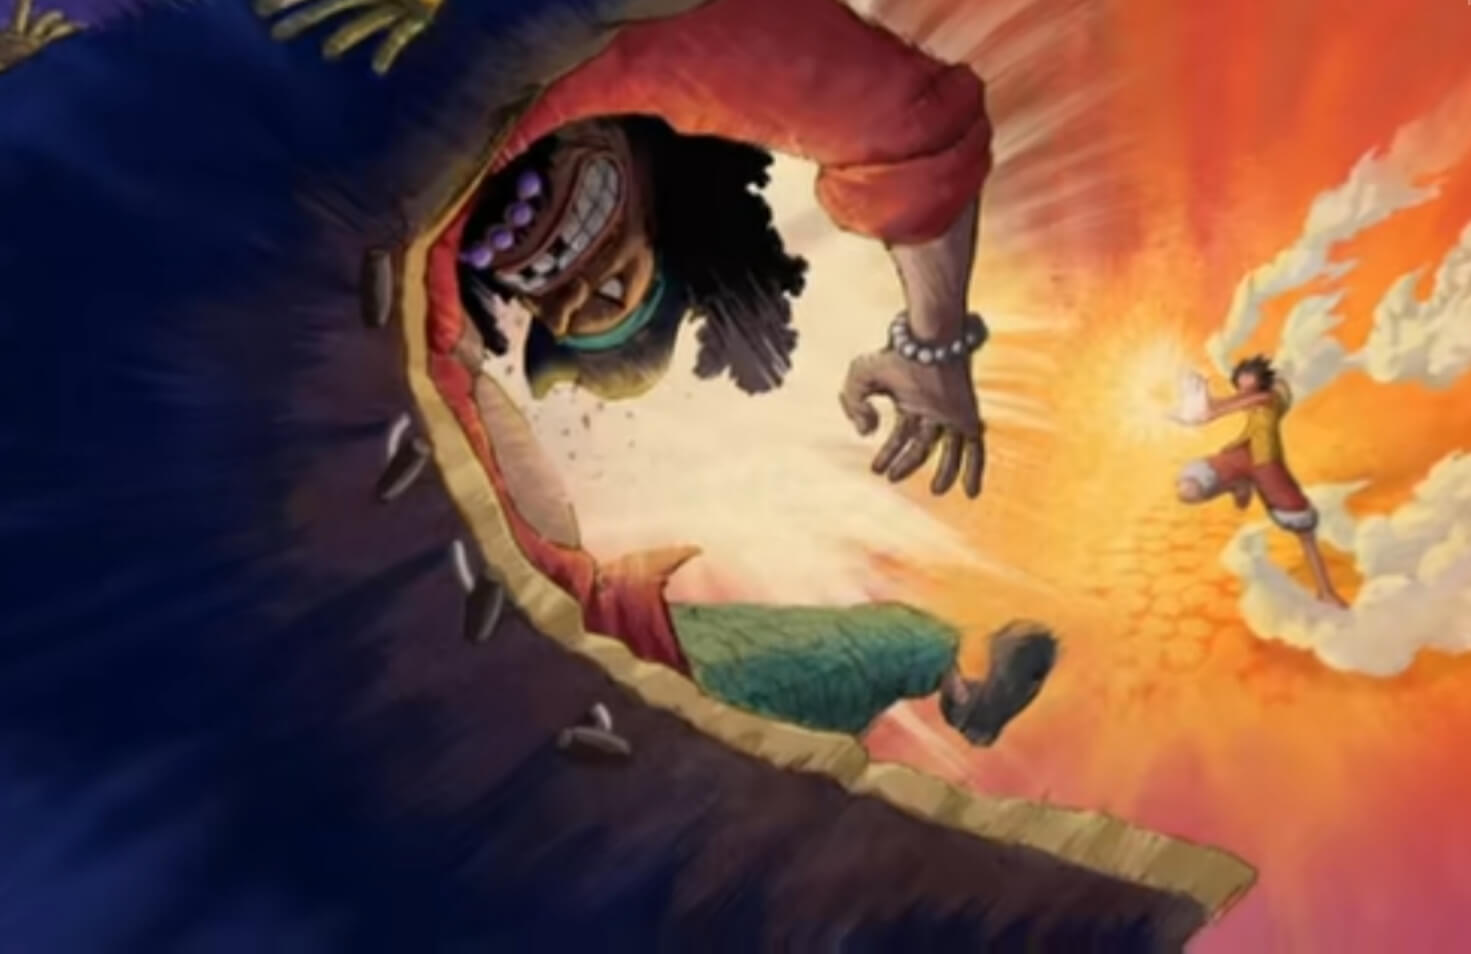 Asal Muasal Ace Tewas di One Piece yang Membuat Luffy Marah Berawal dari Pertarungan dengan Blackbeard